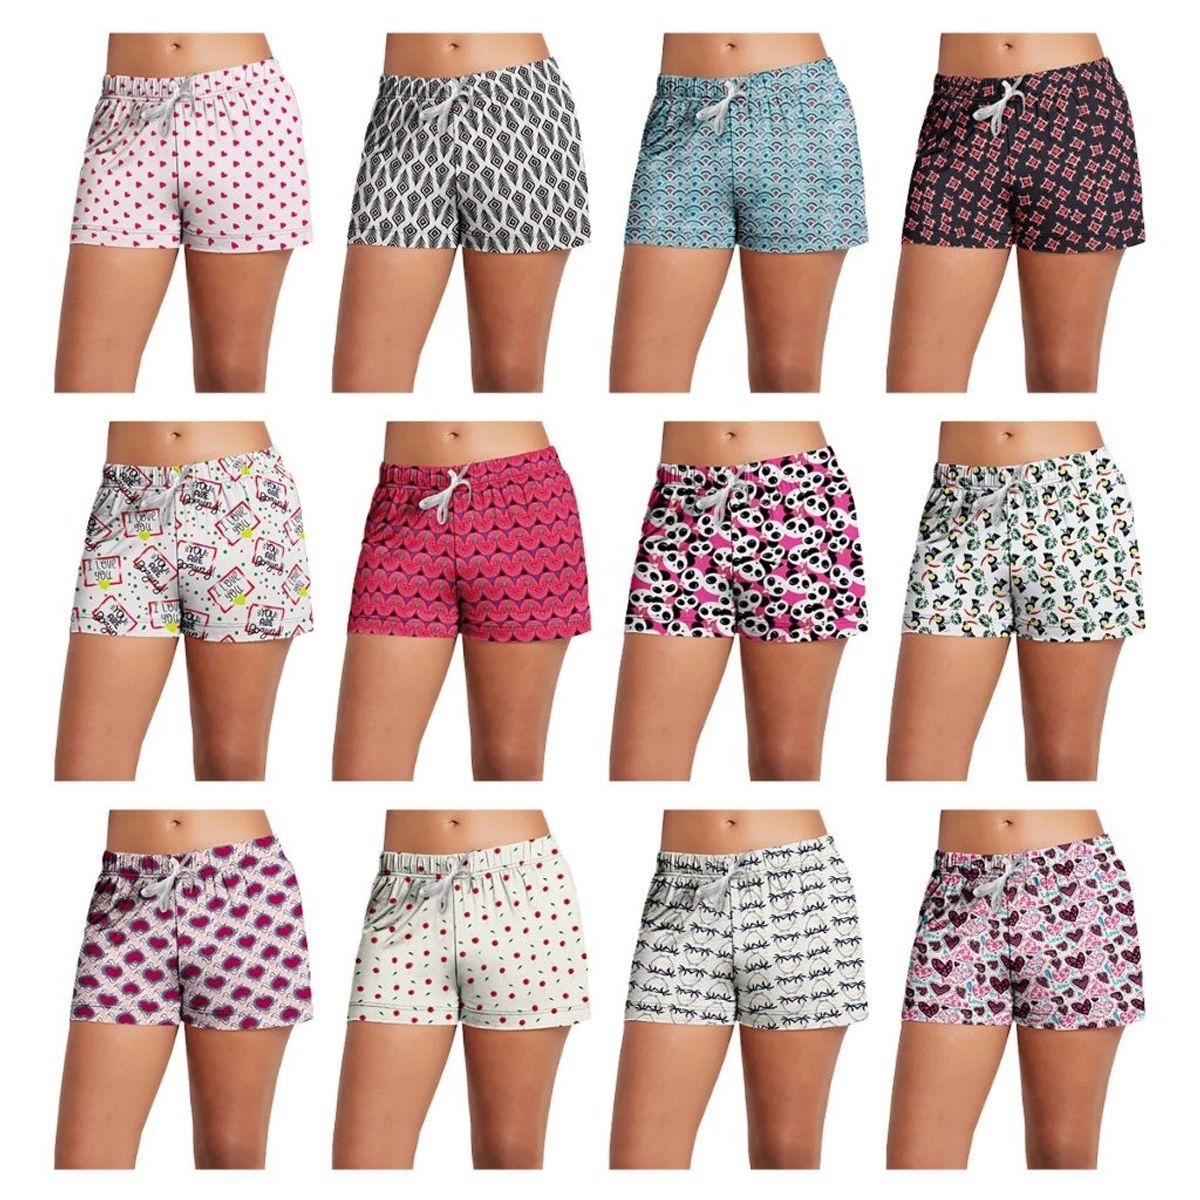 Multi-Pack: Women's Super-Soft Lightweight Fun Printed Comfy Lounge Bottom Pajama Shorts W/ Drawstring - 5-pack, Small, Animal